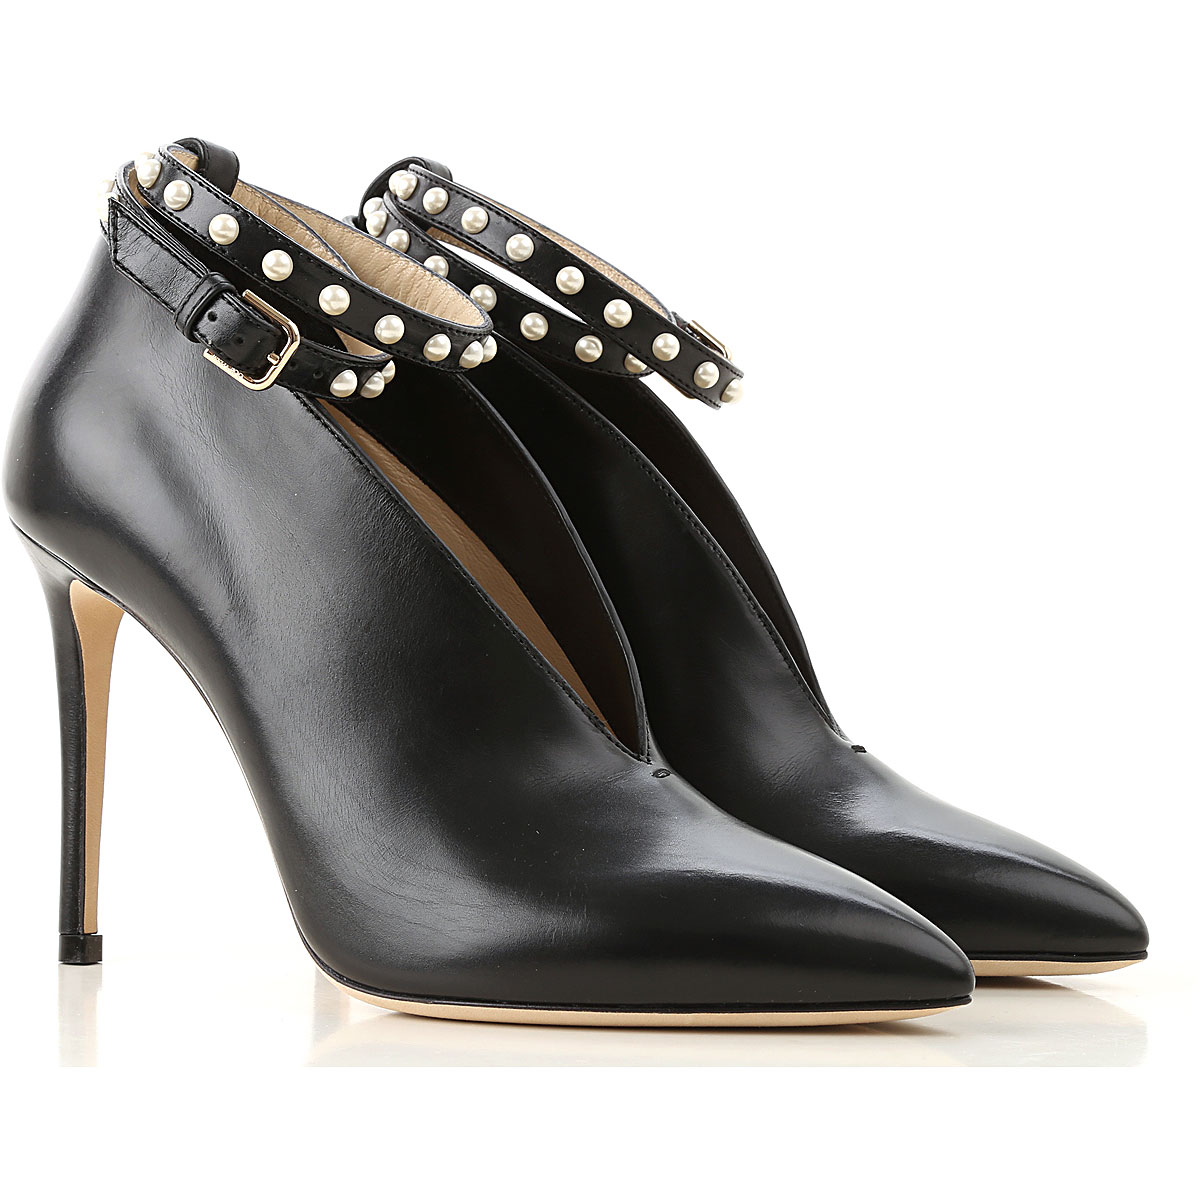 Womens Shoes Jimmy Choo, Style code: lark100-rpp-blackwhite